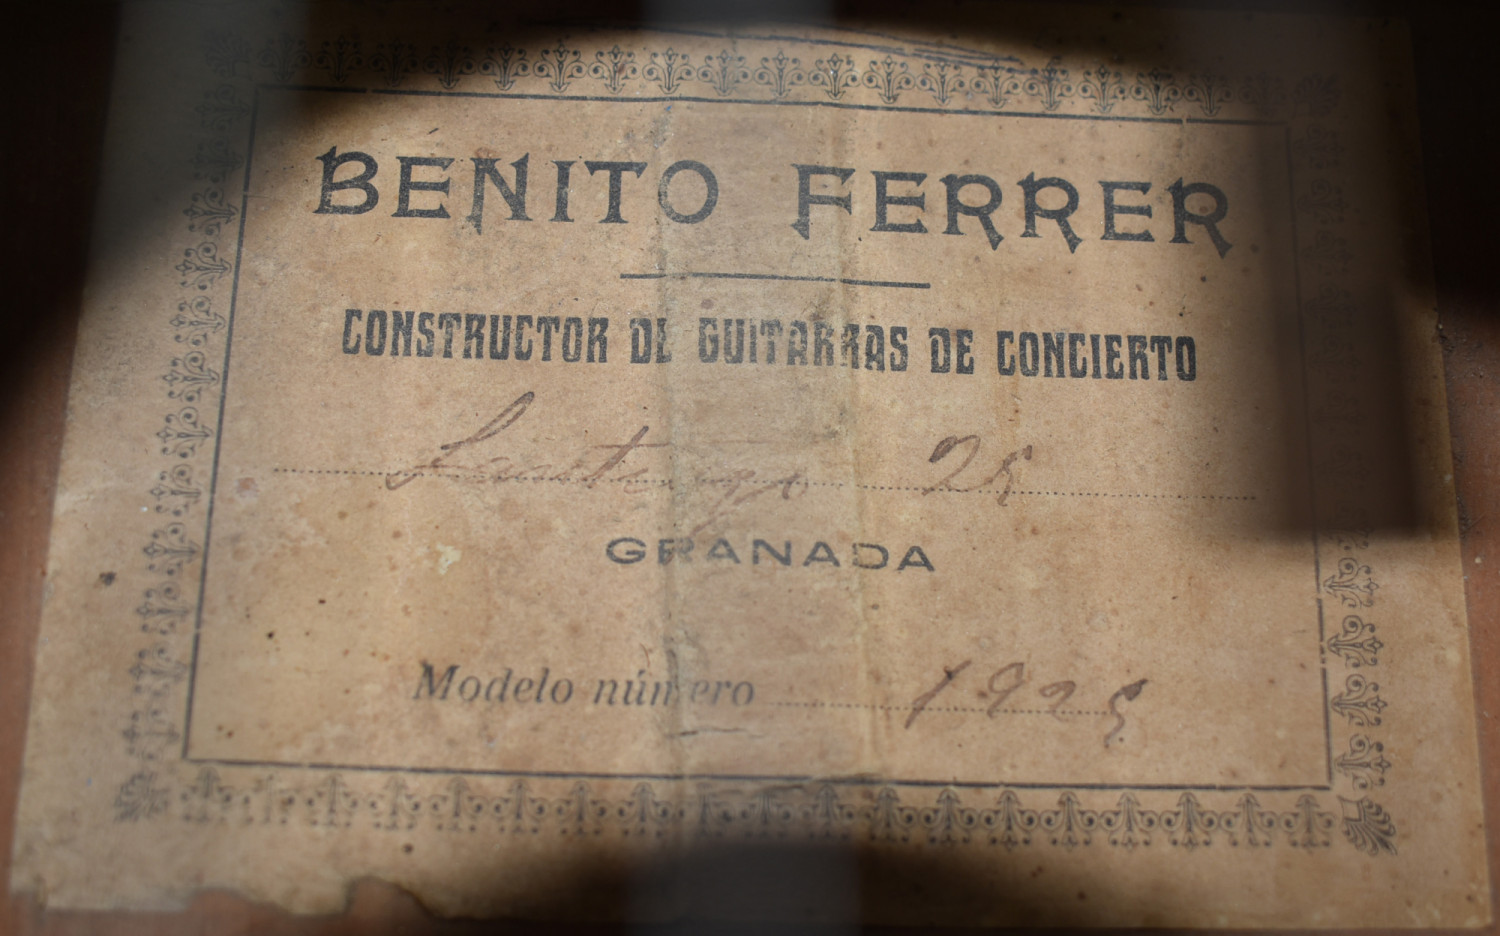 Benito Ferrer